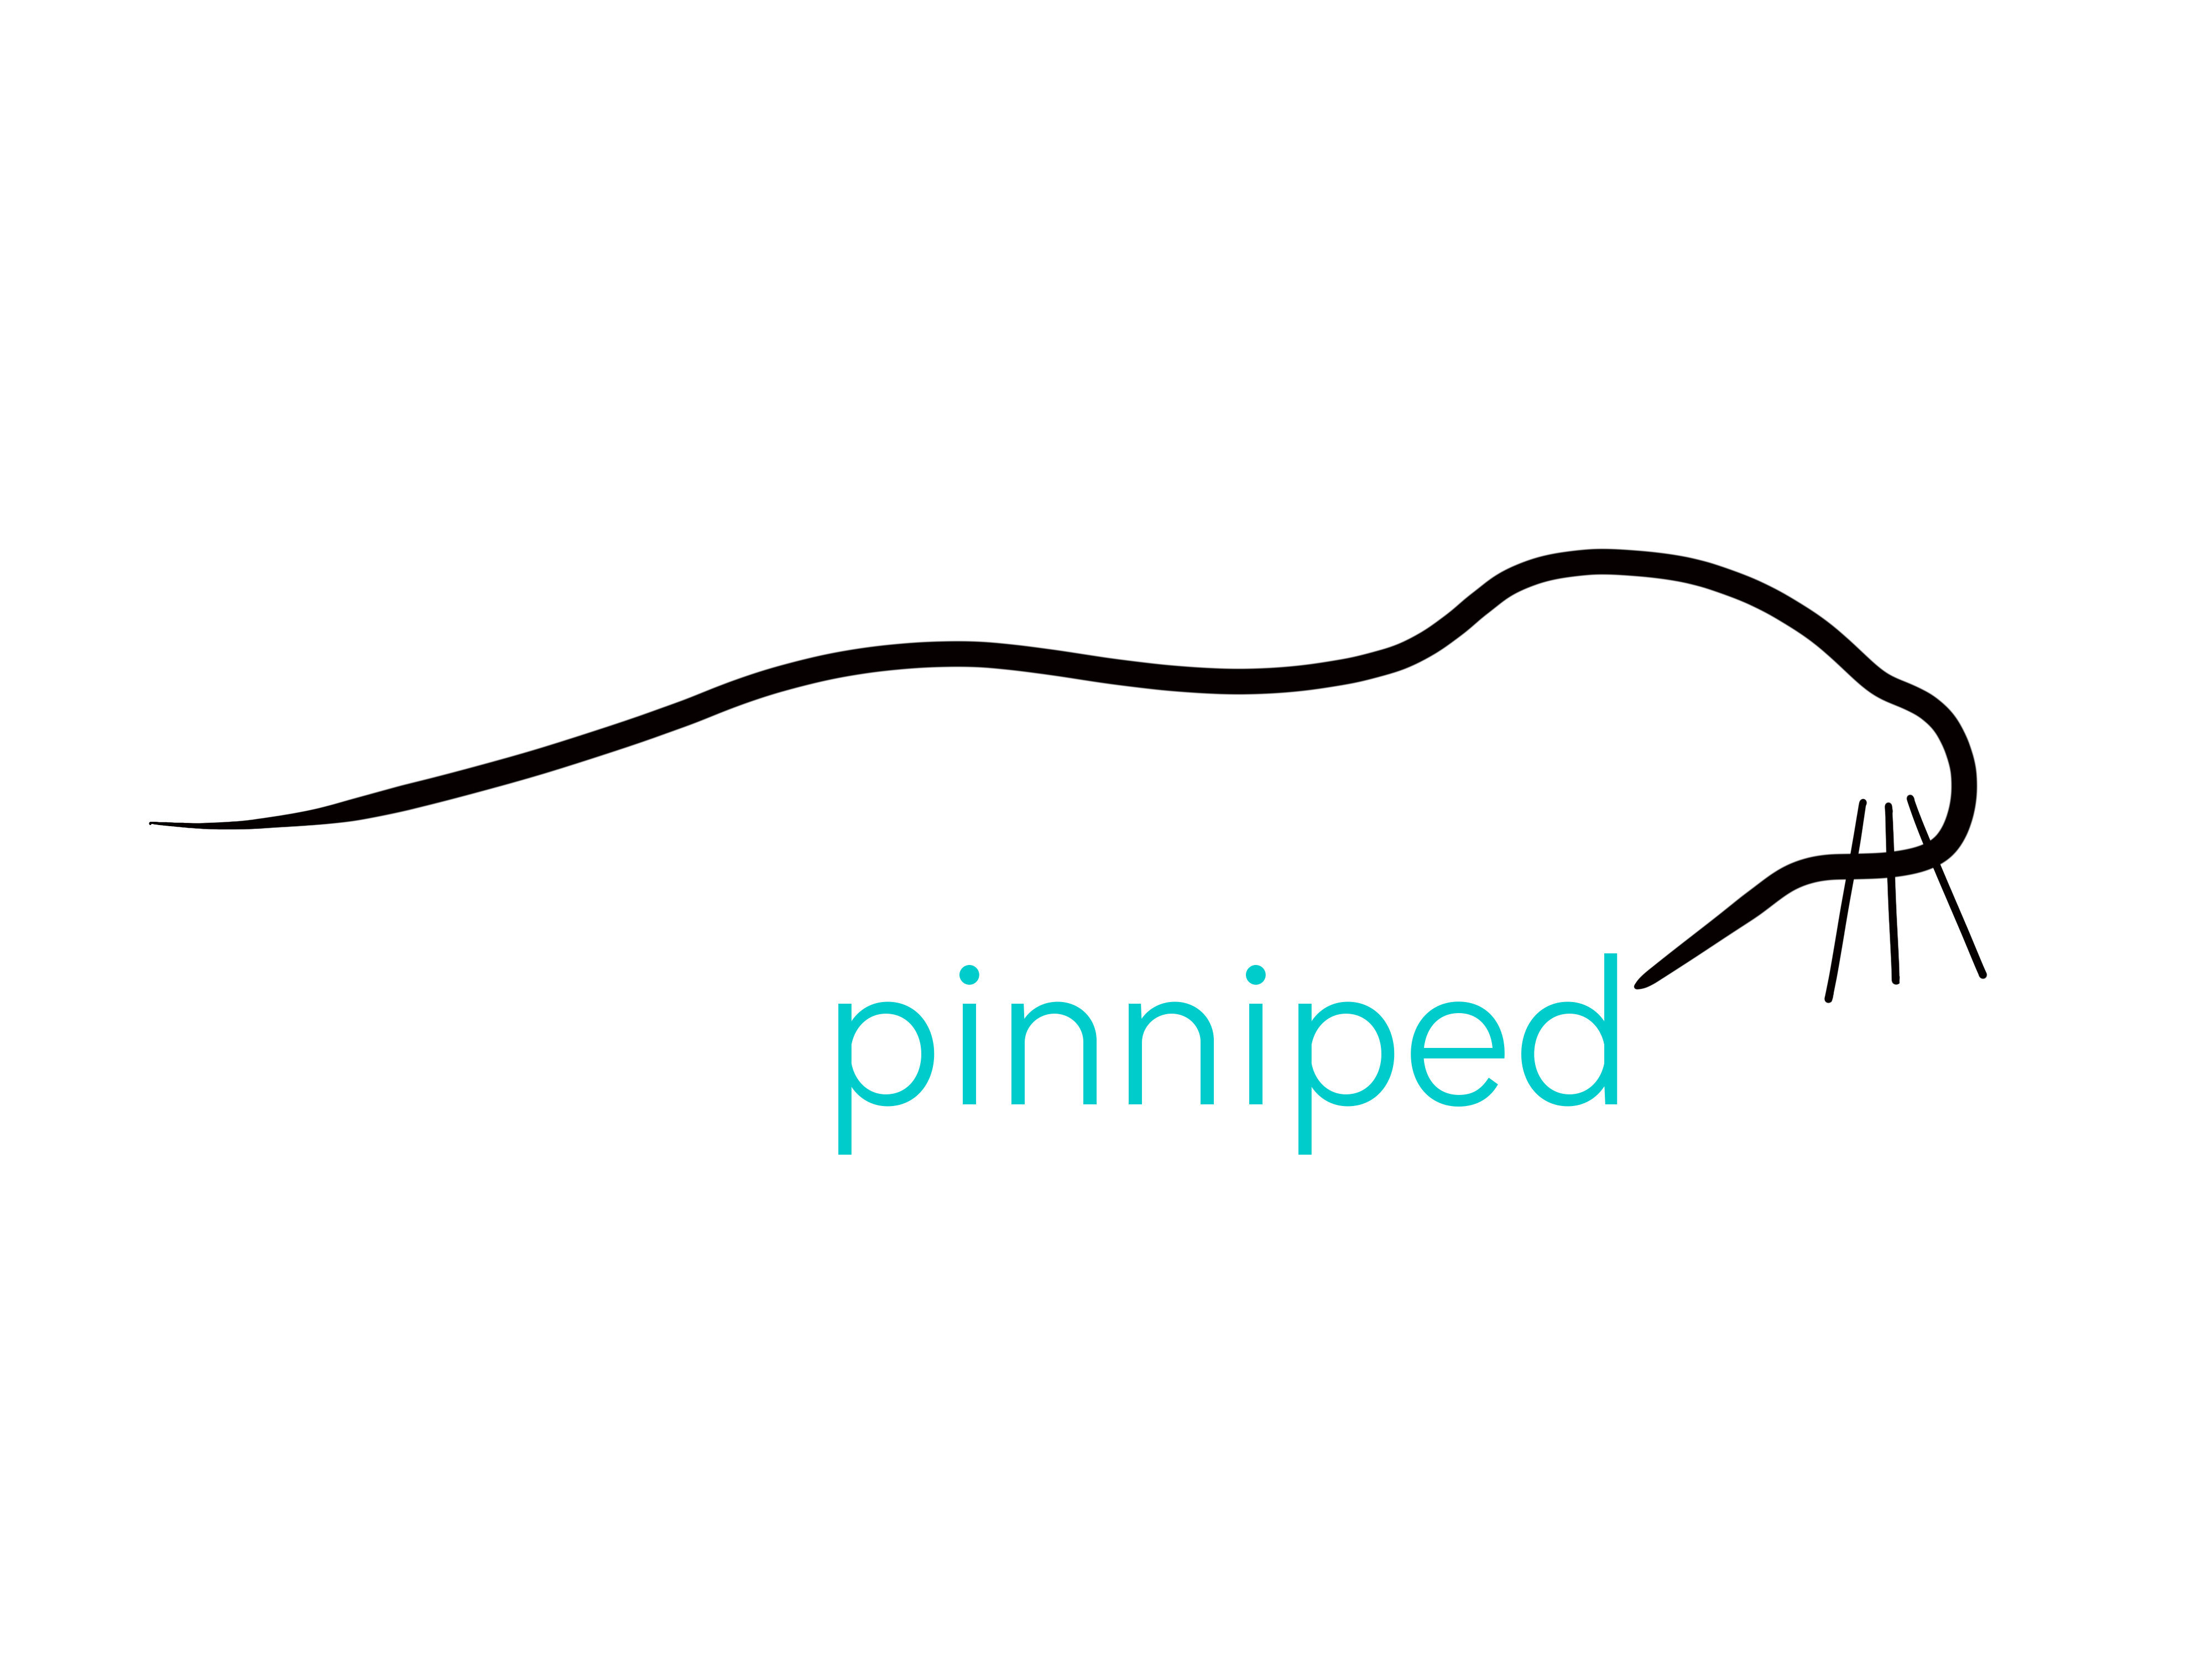 Pinniped